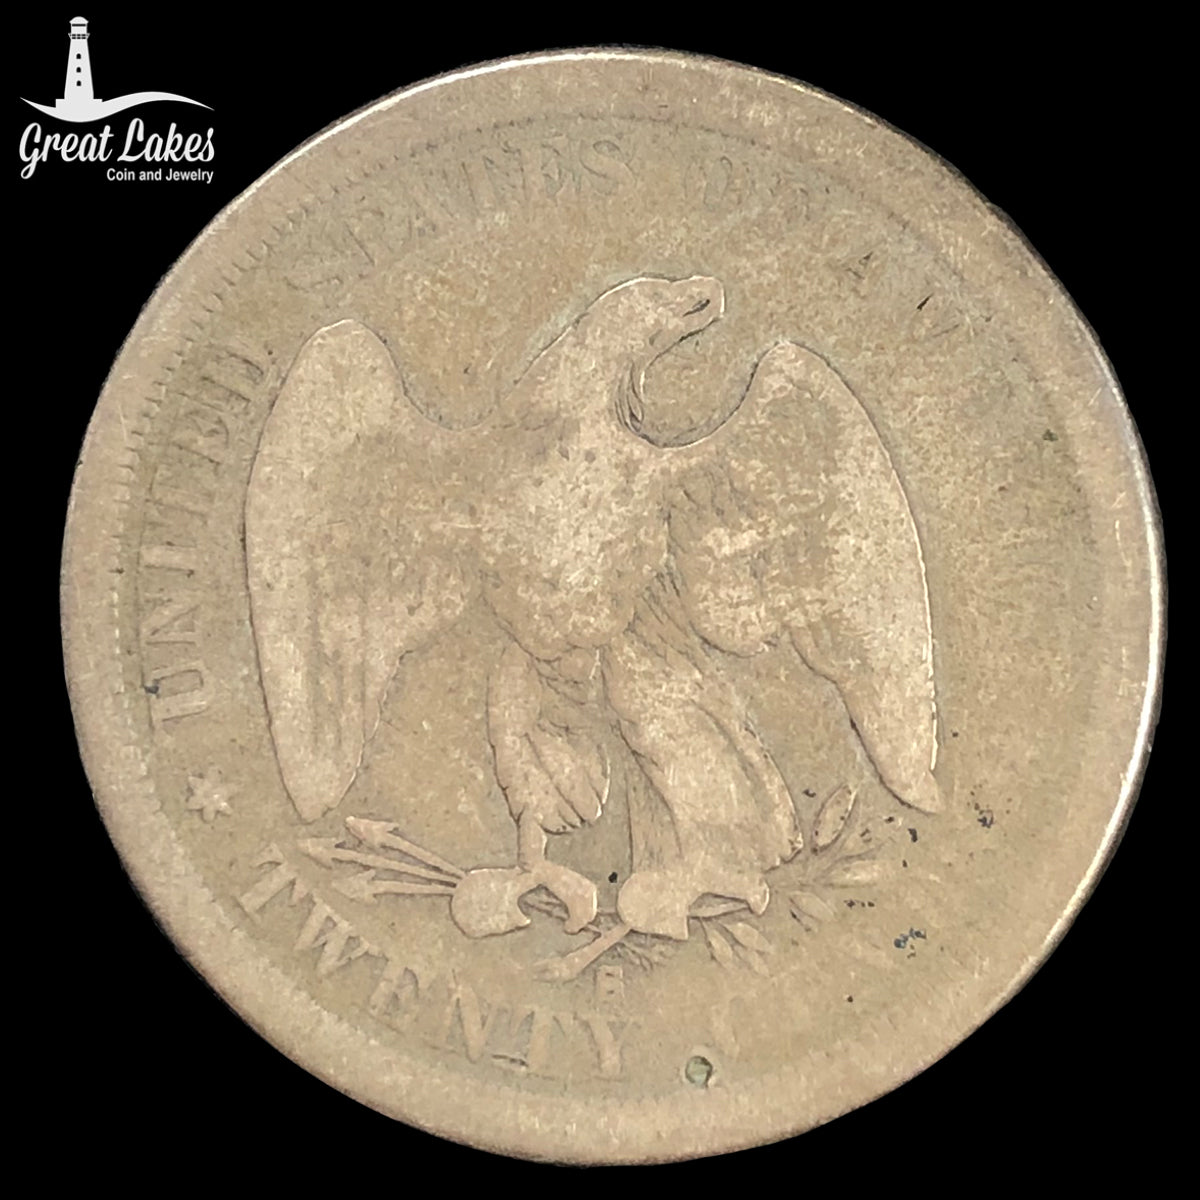 1875-S 20 Cent Piece (G)